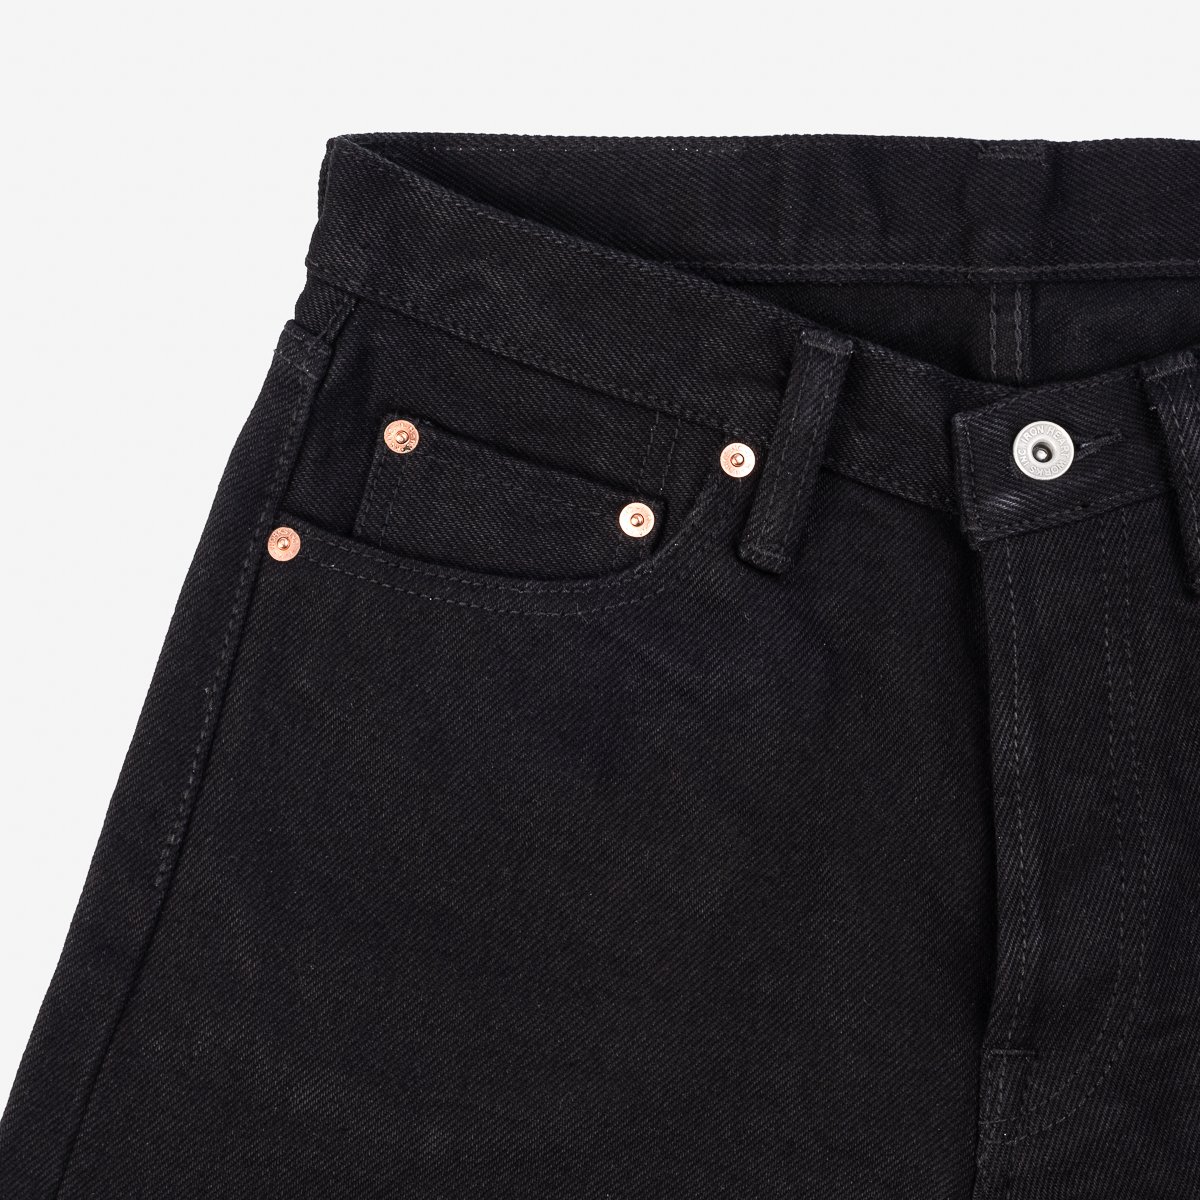 21oz Selvedge Denim Straight Cut Jeans - Superblack (Fades to Grey - SBG)